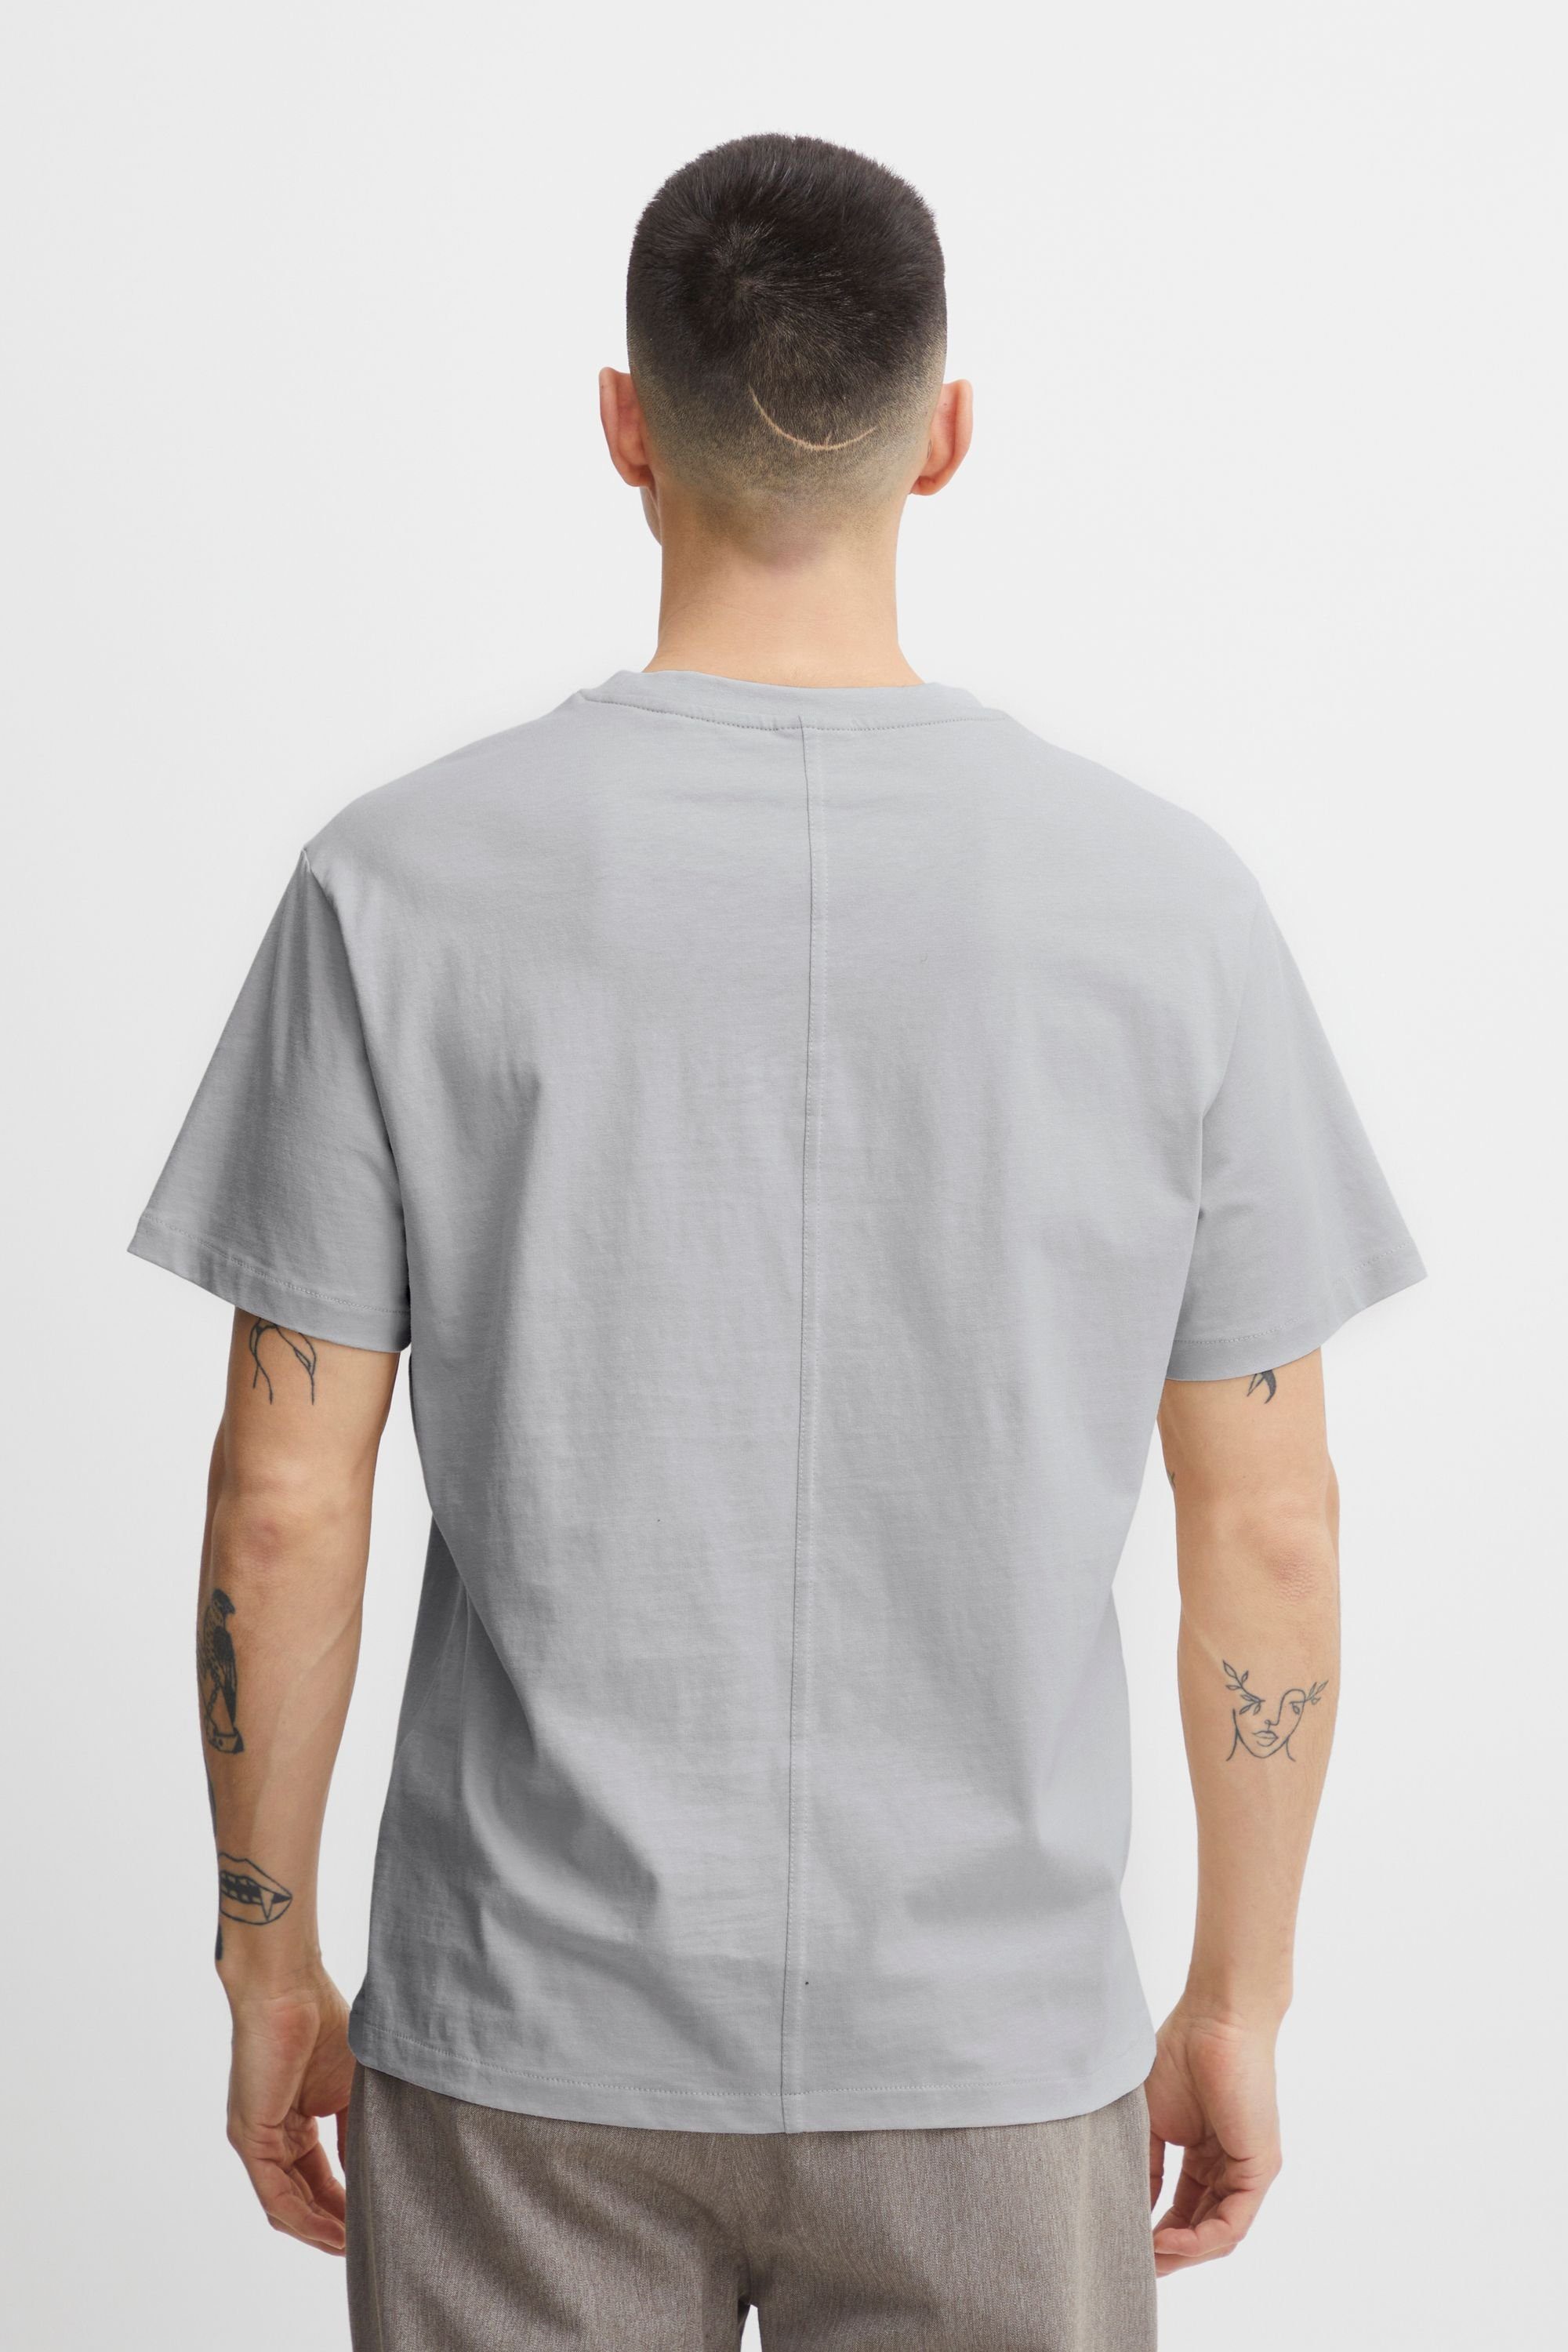 SS !Solid T-Shirt (1541011) Grey SDCadel 21107195 Melange Light